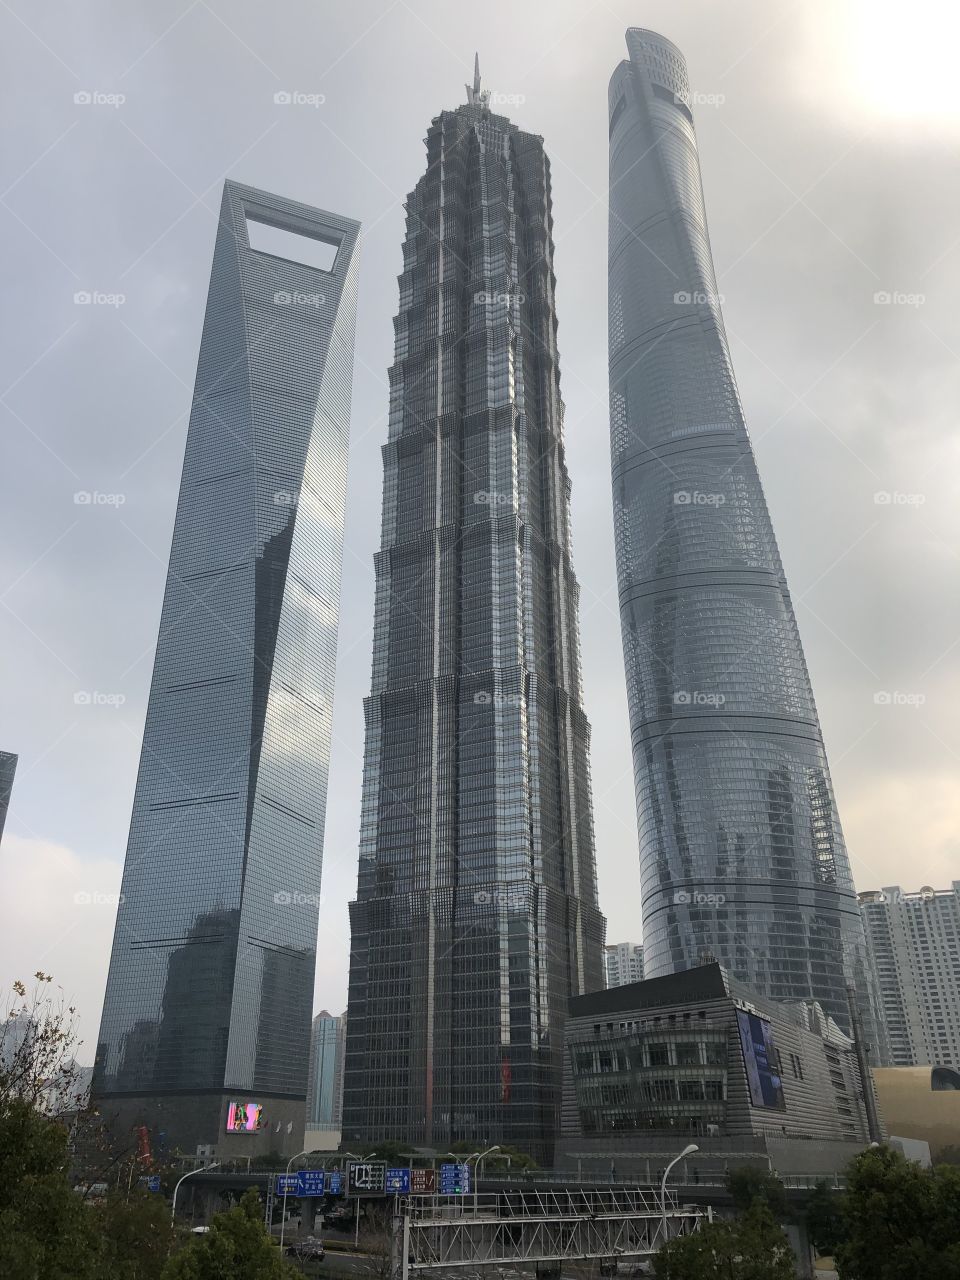 Shanghai towers 